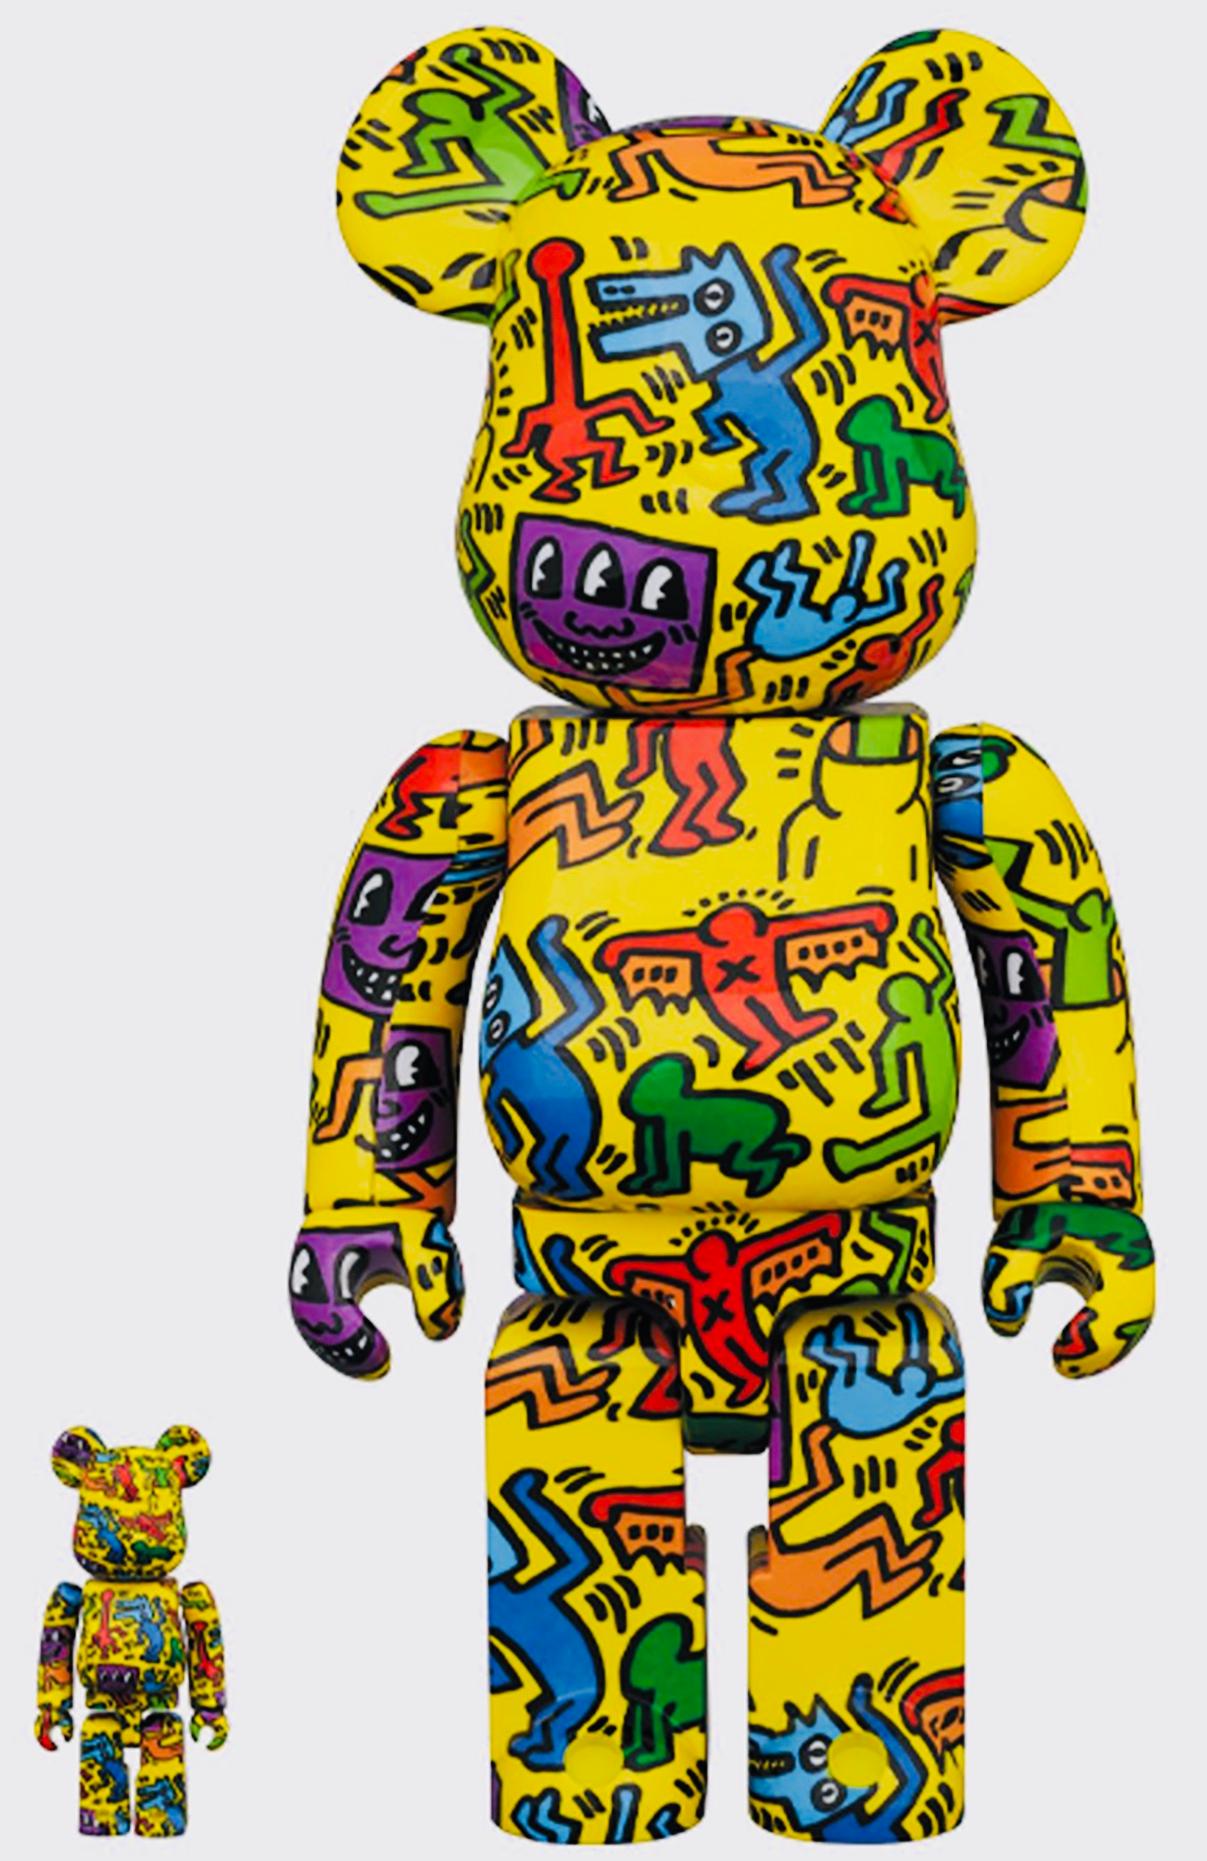 Keith Haring Bearbrick 400% Companion (Haring BE@RBRICK) 1